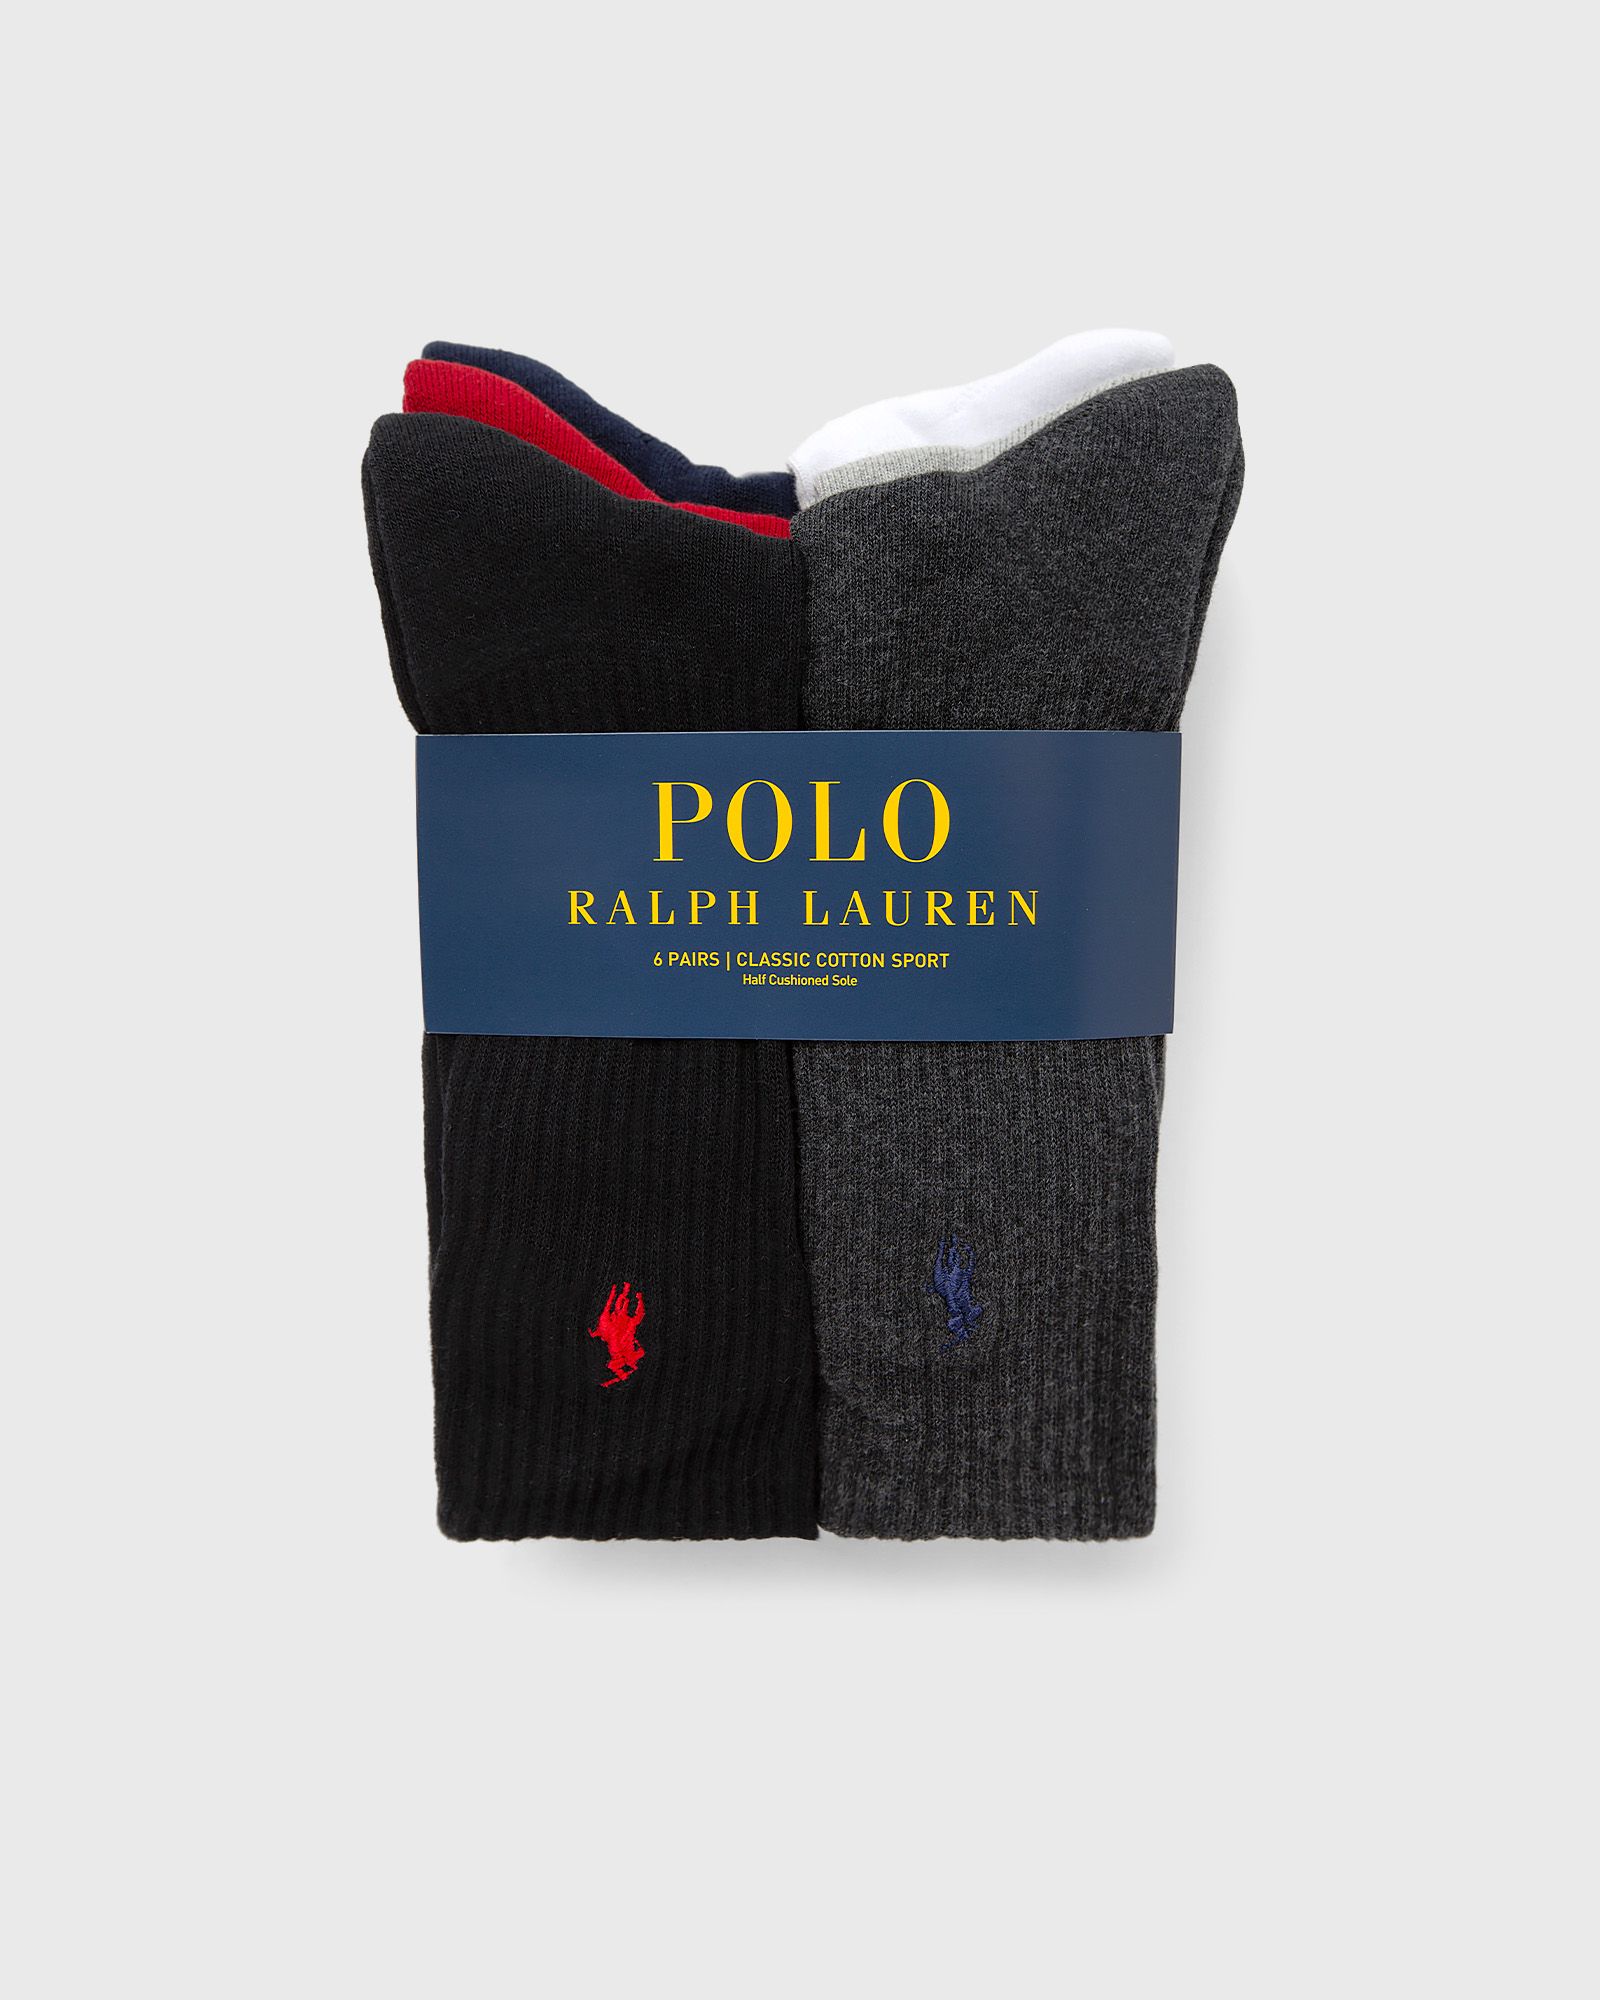 Polo Ralph Lauren - 6 cottn crew-crew-6 pack men socks multi in größe:one size